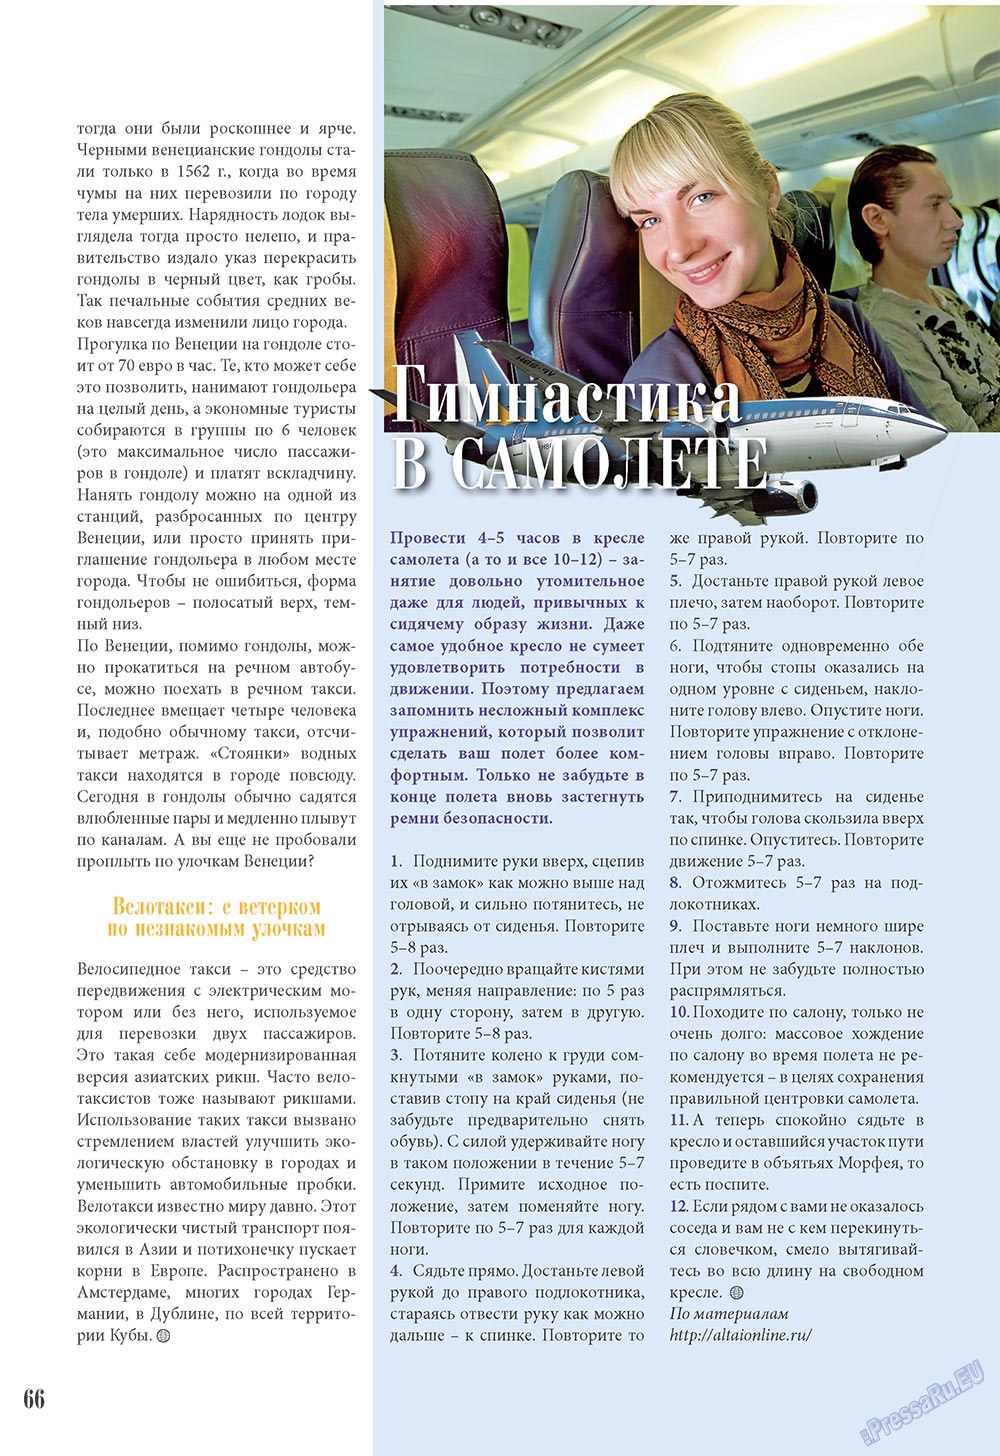 Наше Турбюро (журнал). 2009 год, номер 1, стр. 66